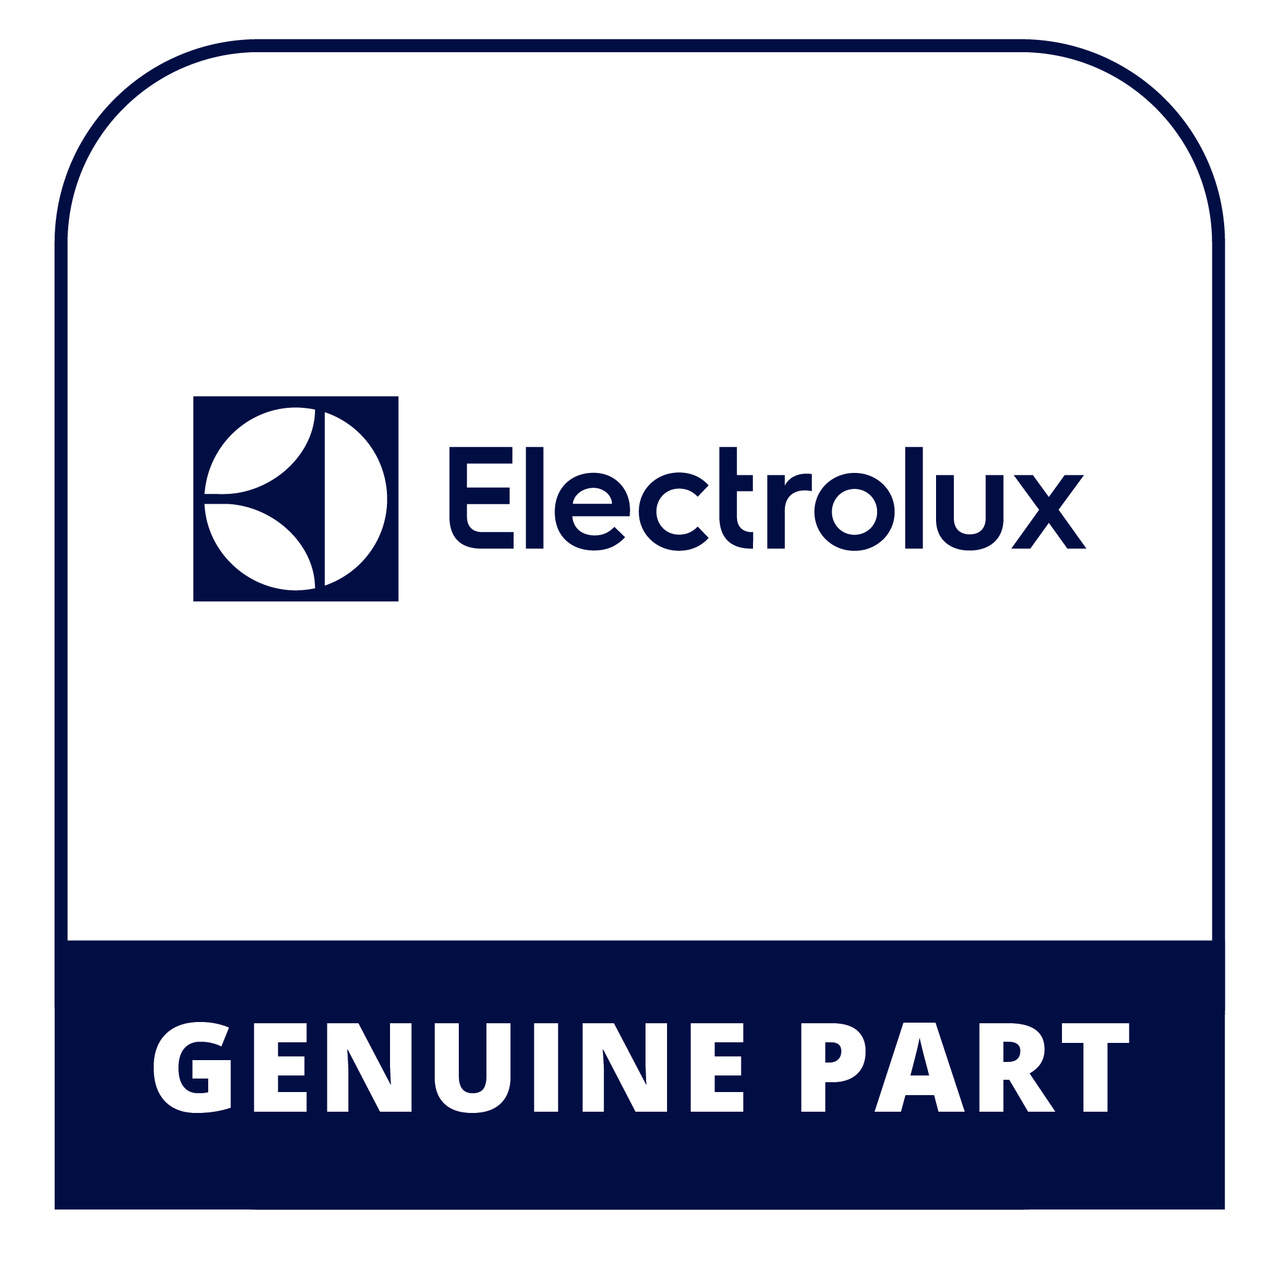 Frigidaire - Electrolux 241679003 - Cover - Genuine Electrolux Part